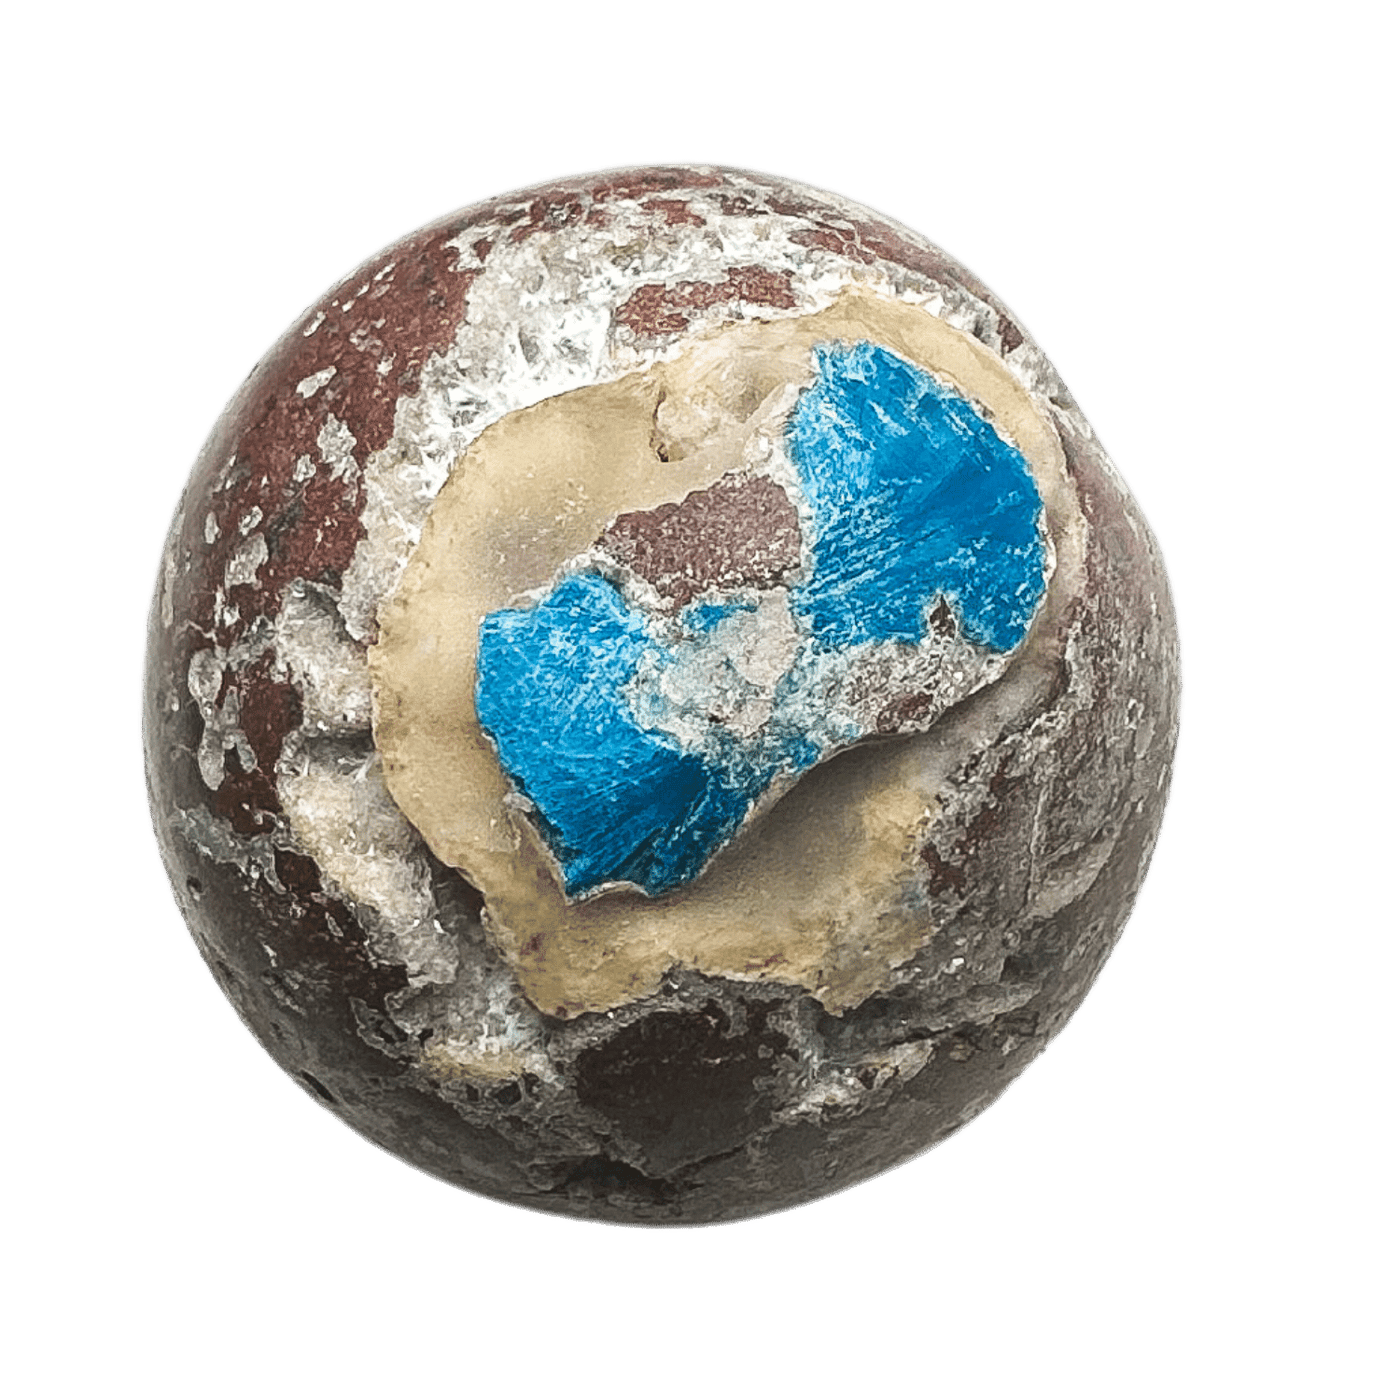 Rare Half-Polished Cavansite Sphere